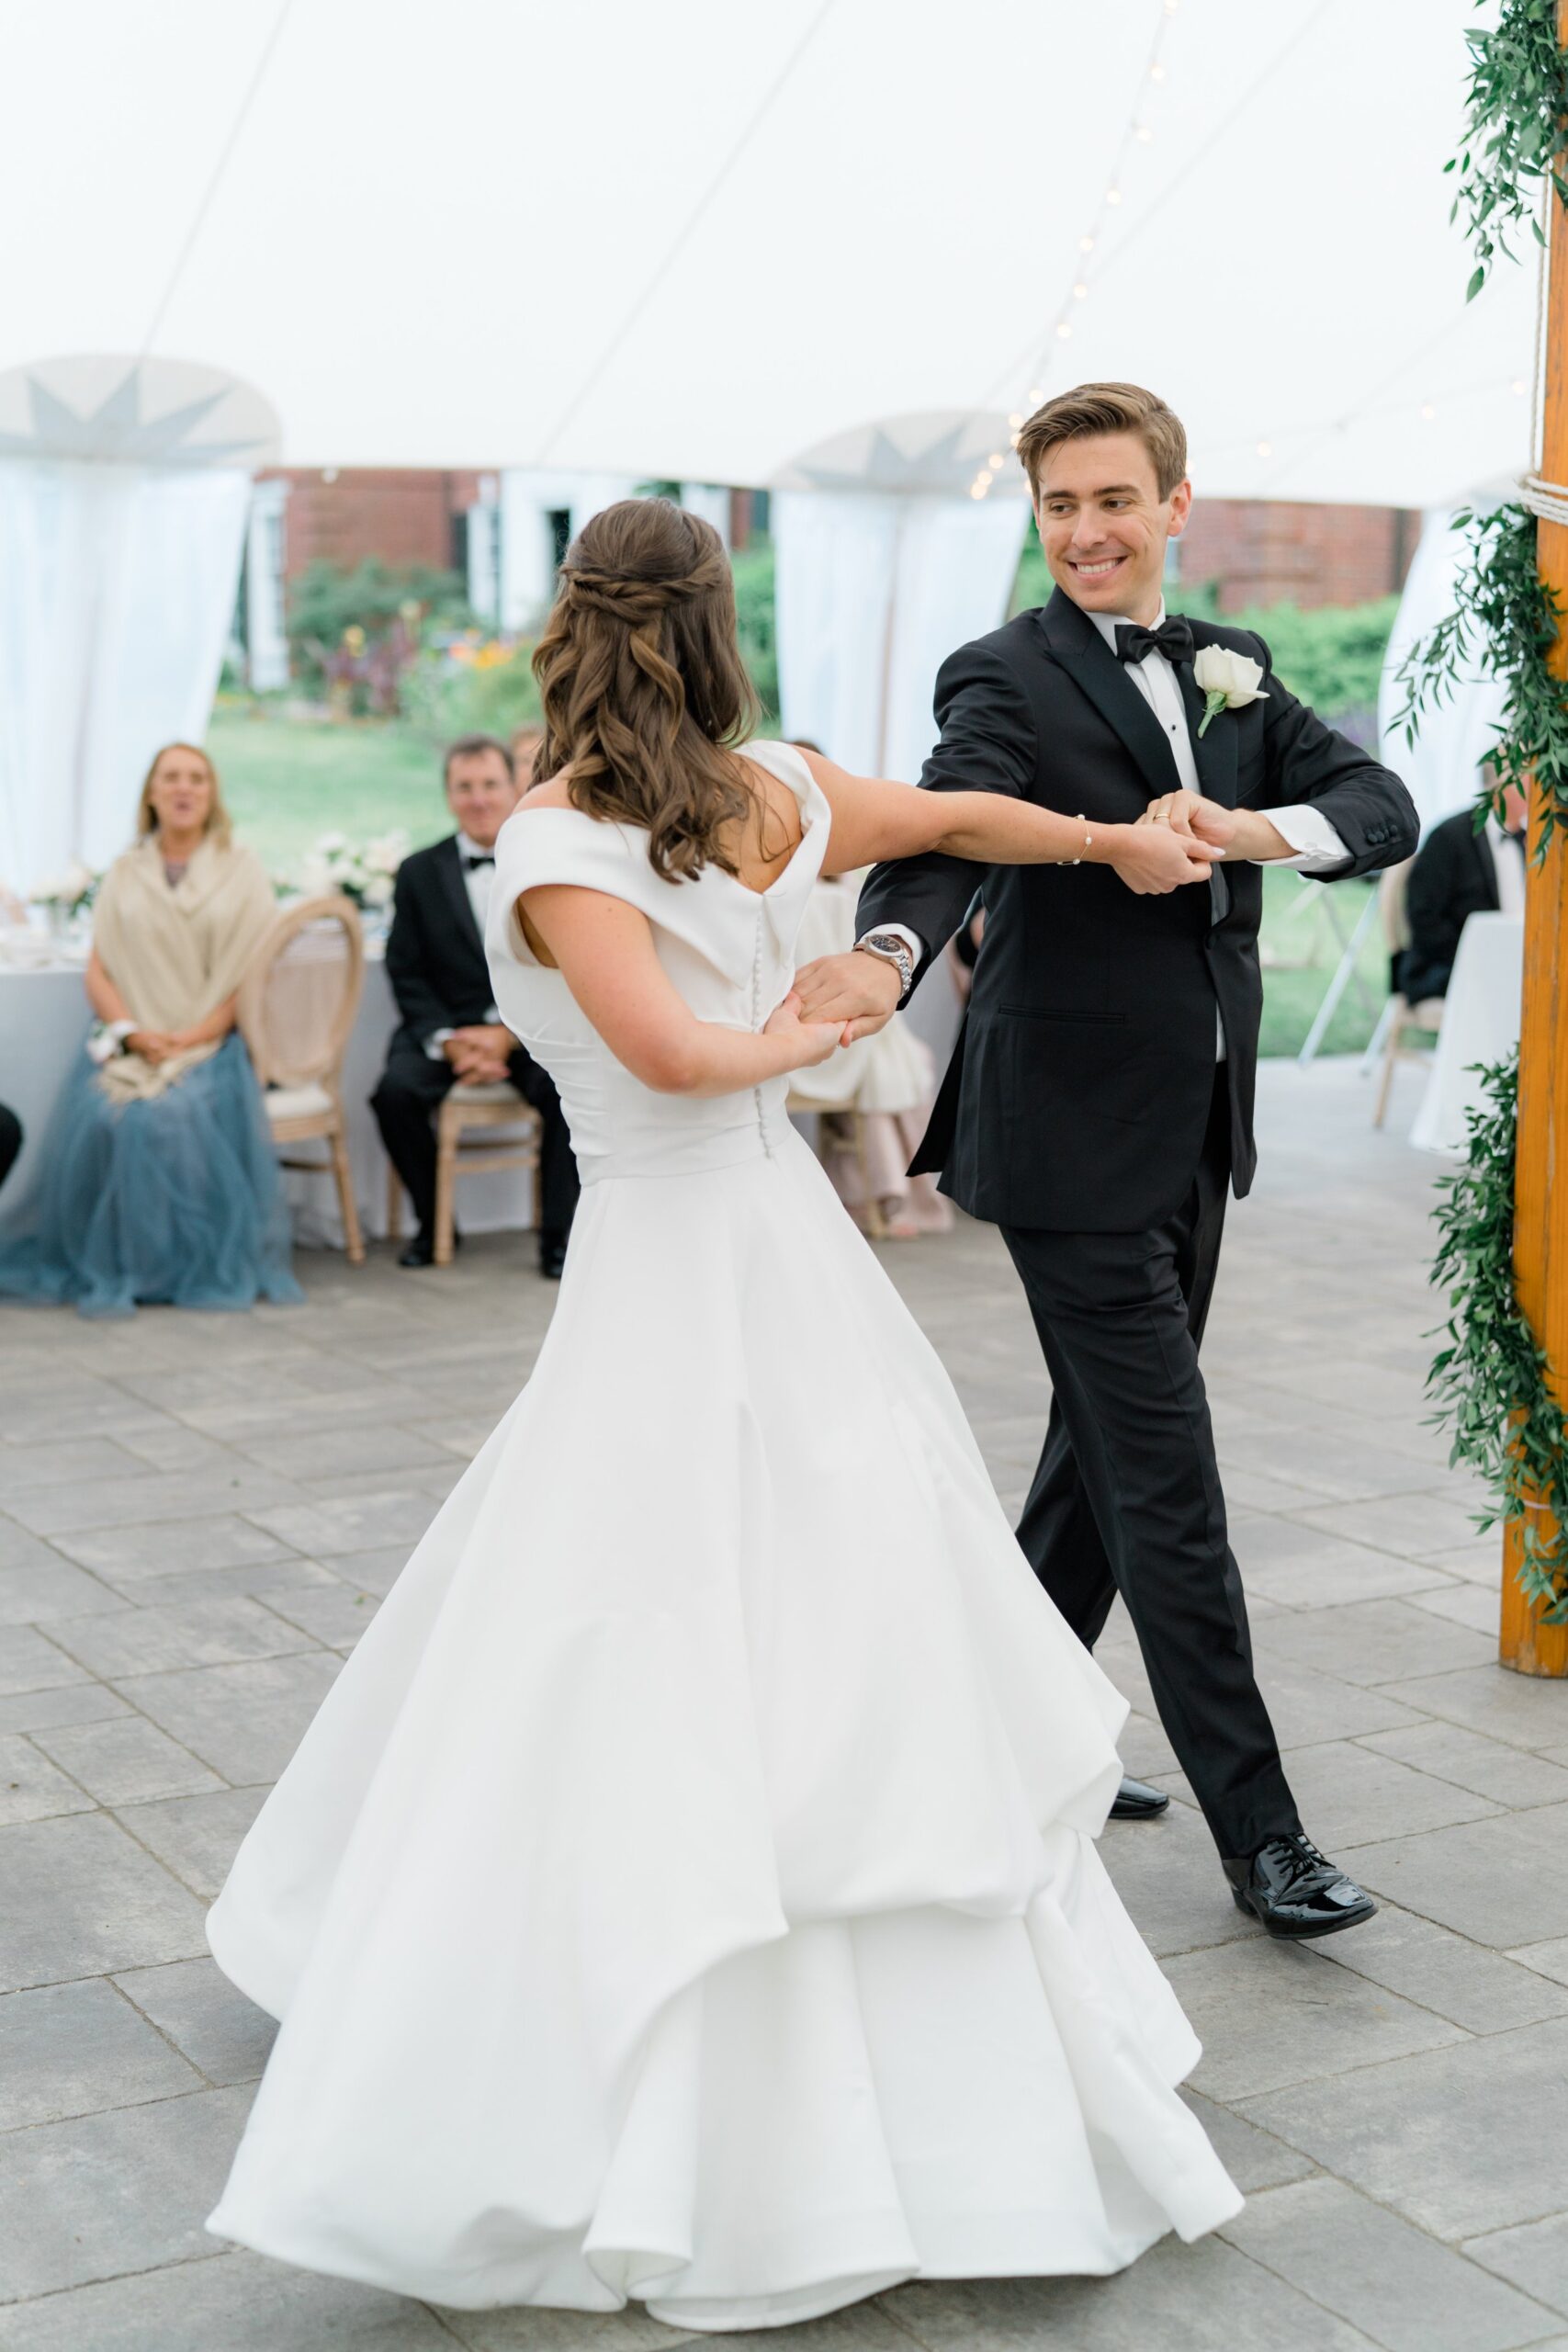 Bridgerton inspired first dance at summer outdoor wedding reception at the Bradley Estate.